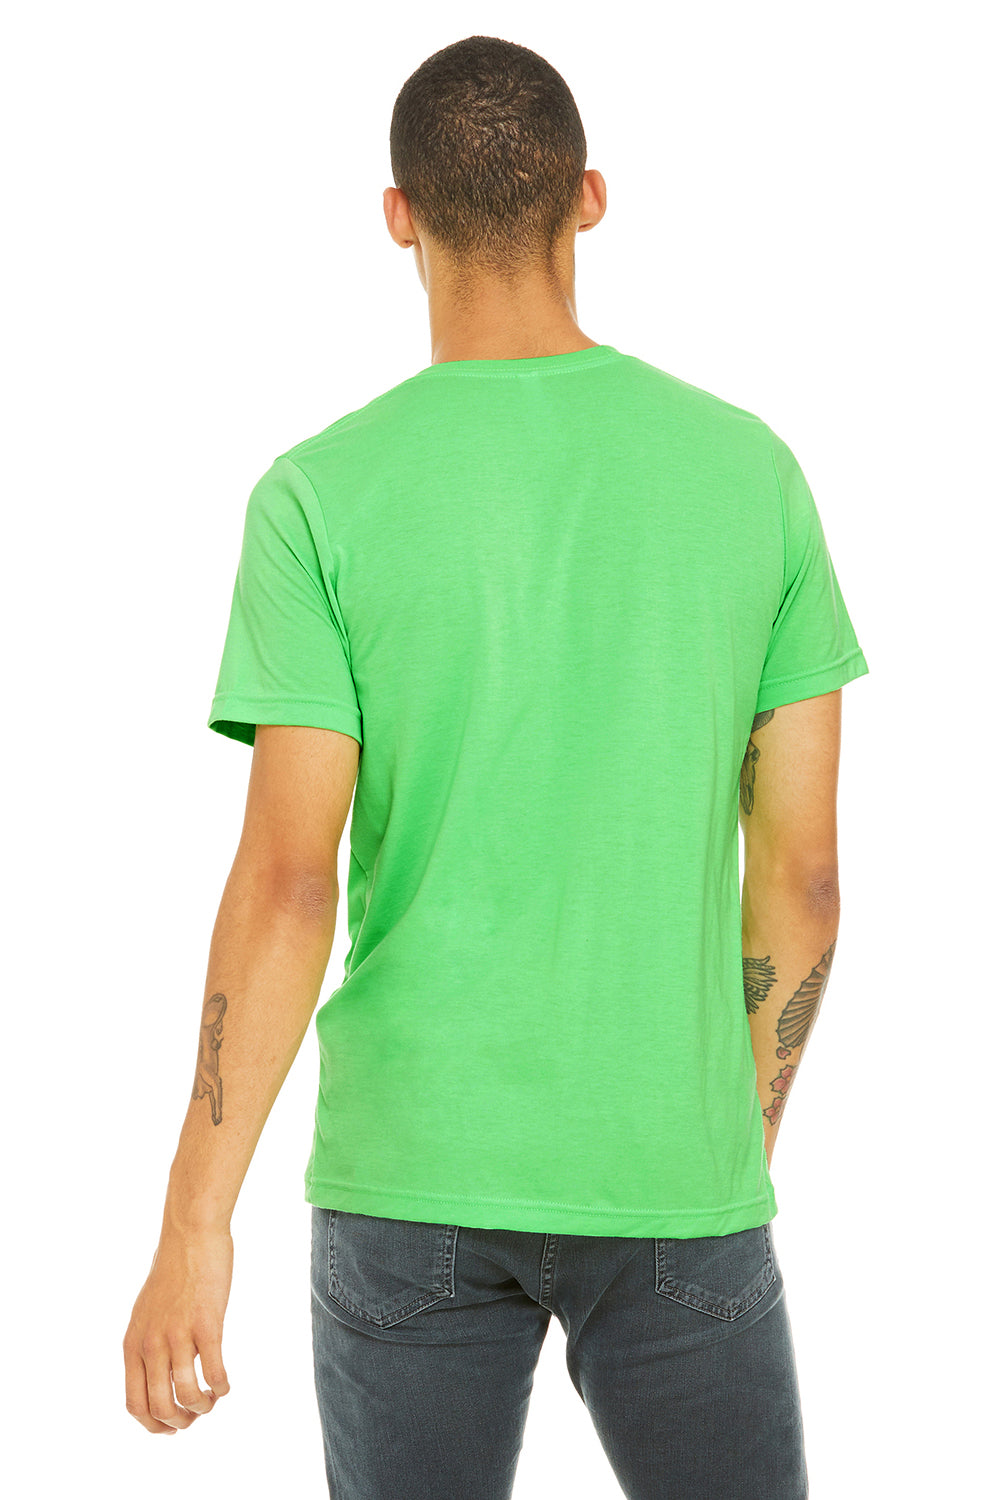 Bella + Canvas 3650 Mens Short Sleeve Crewneck T-Shirt Neon Green Back